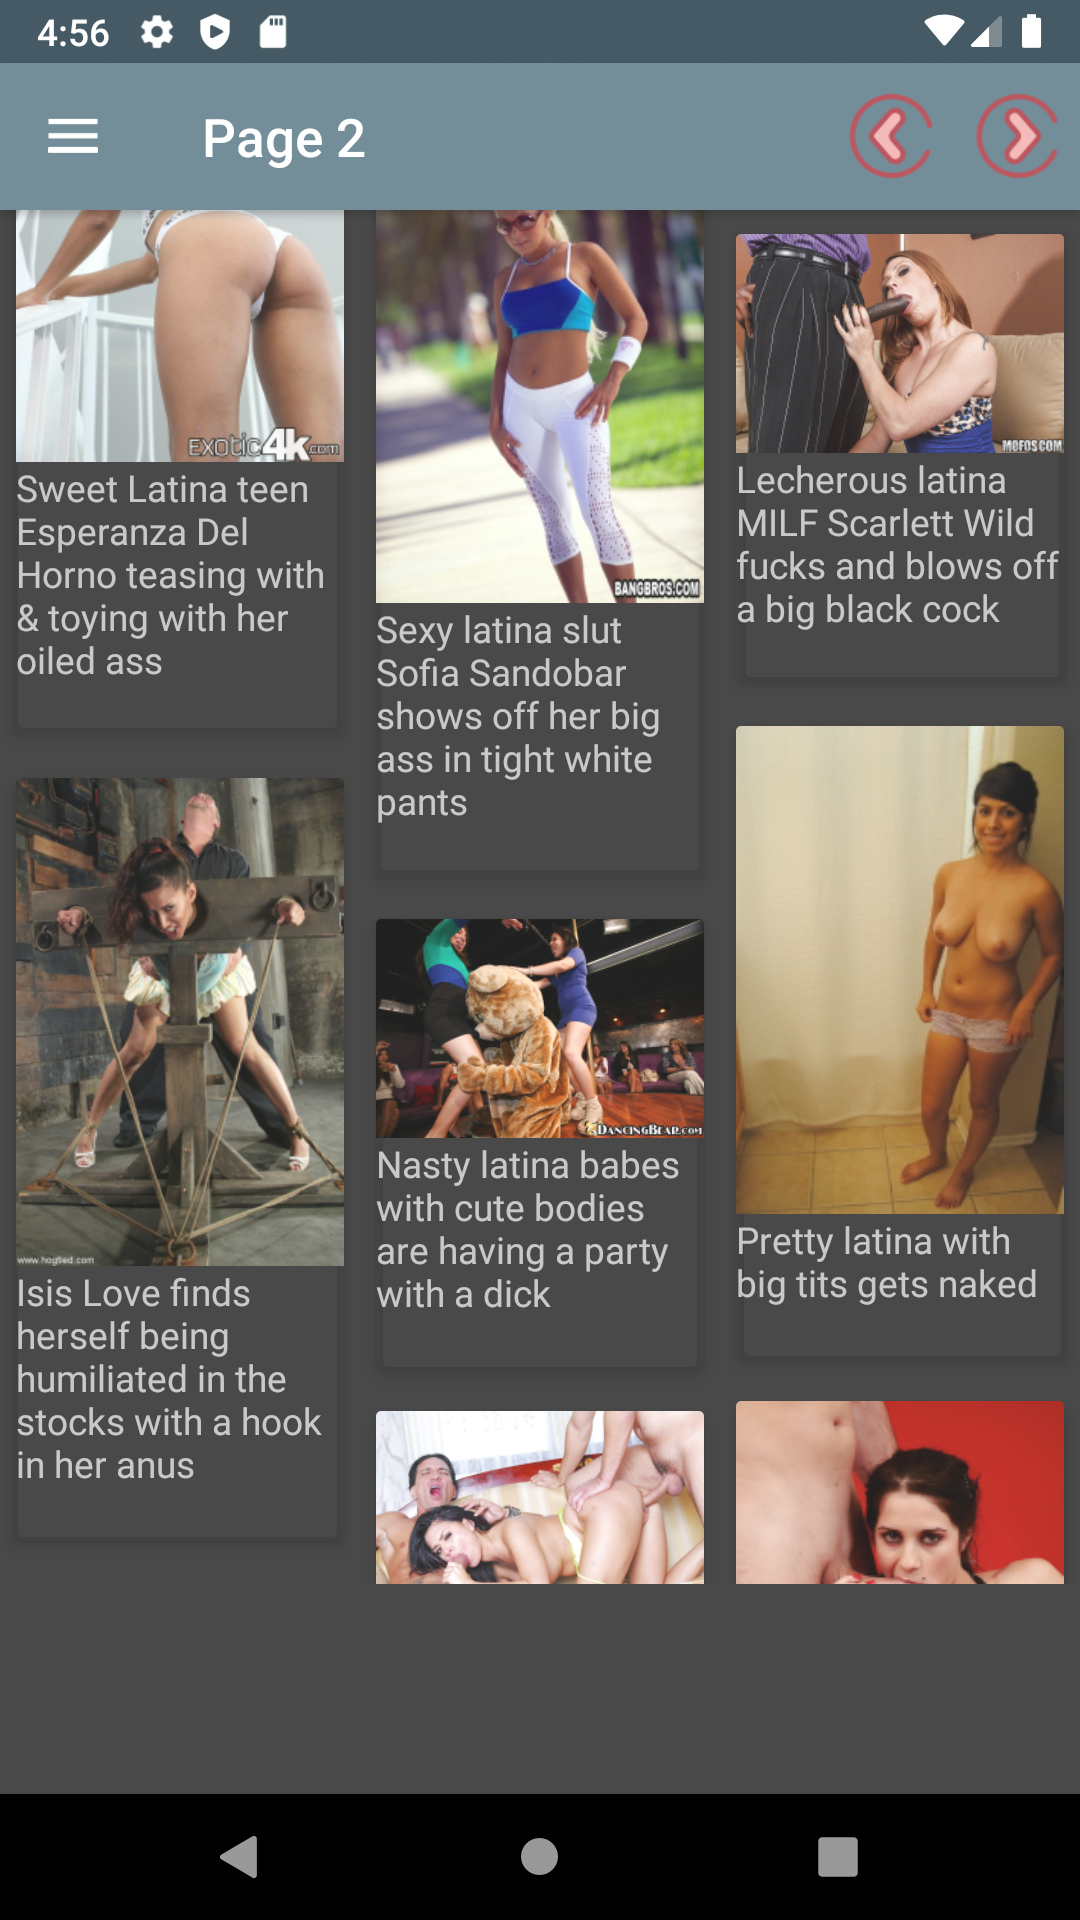 Latina Sex hot,photo,henati,download,sexy,adult,wallpaper,pornstars,lisa,picture,panties,hentai,wallpapers,femboy,edit,good,apps,gallery,apk,porn,galleries,upskirt,app,hentie